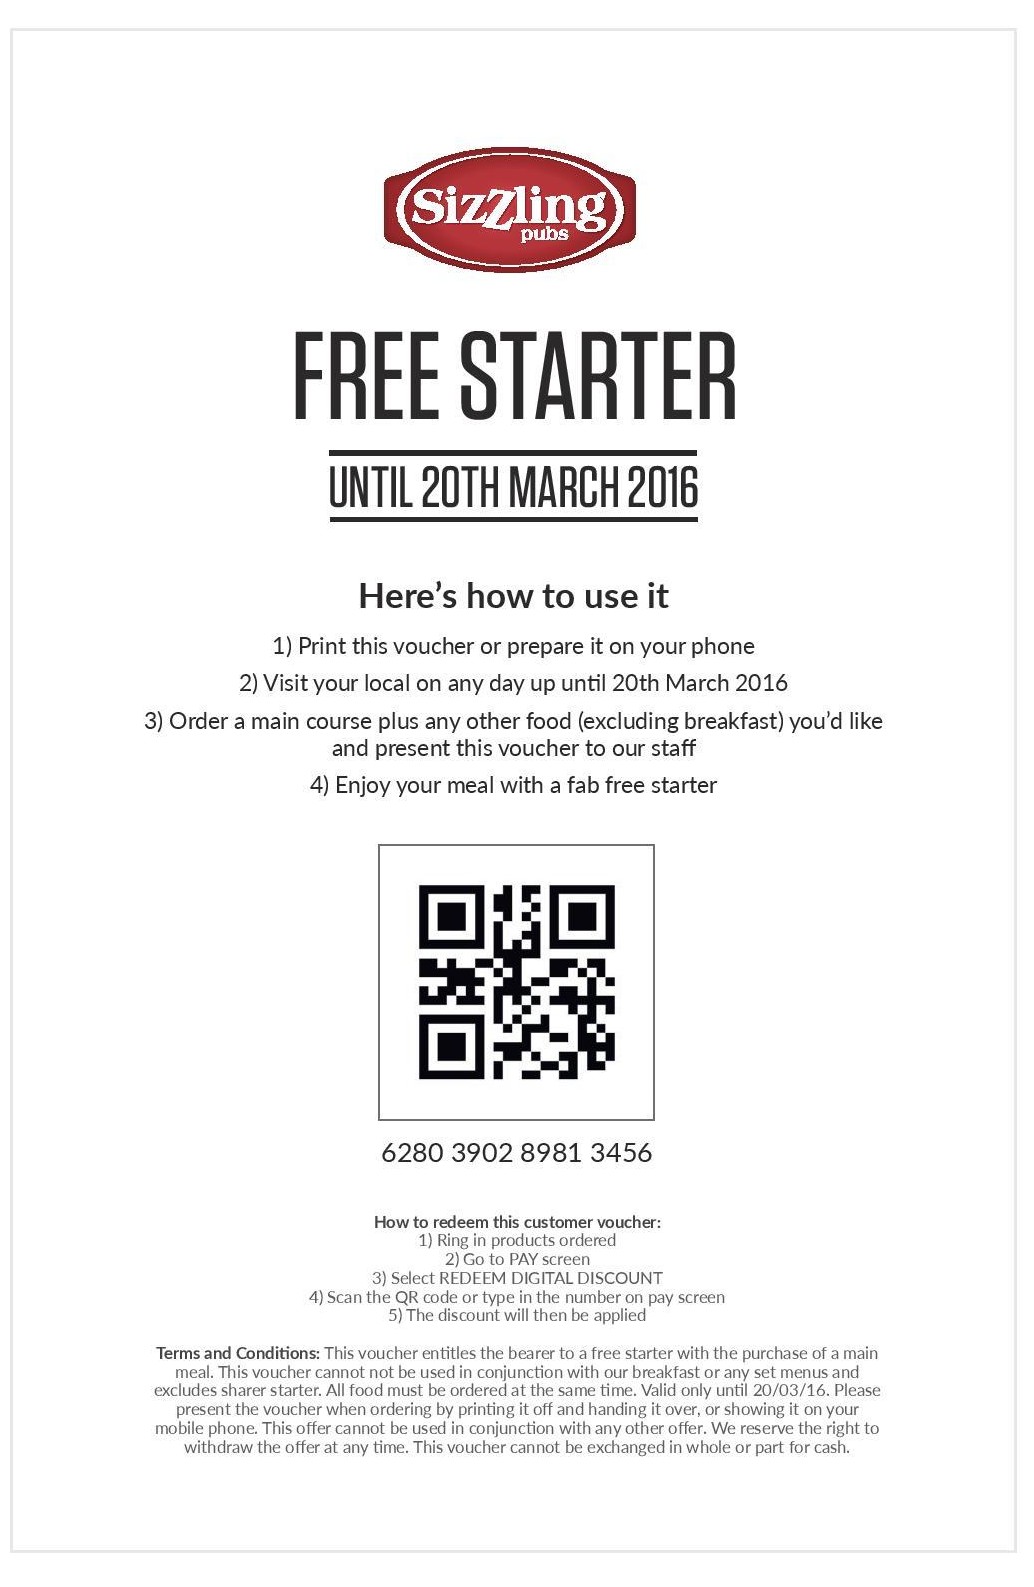 free starter sizzling pubs discount code voucher